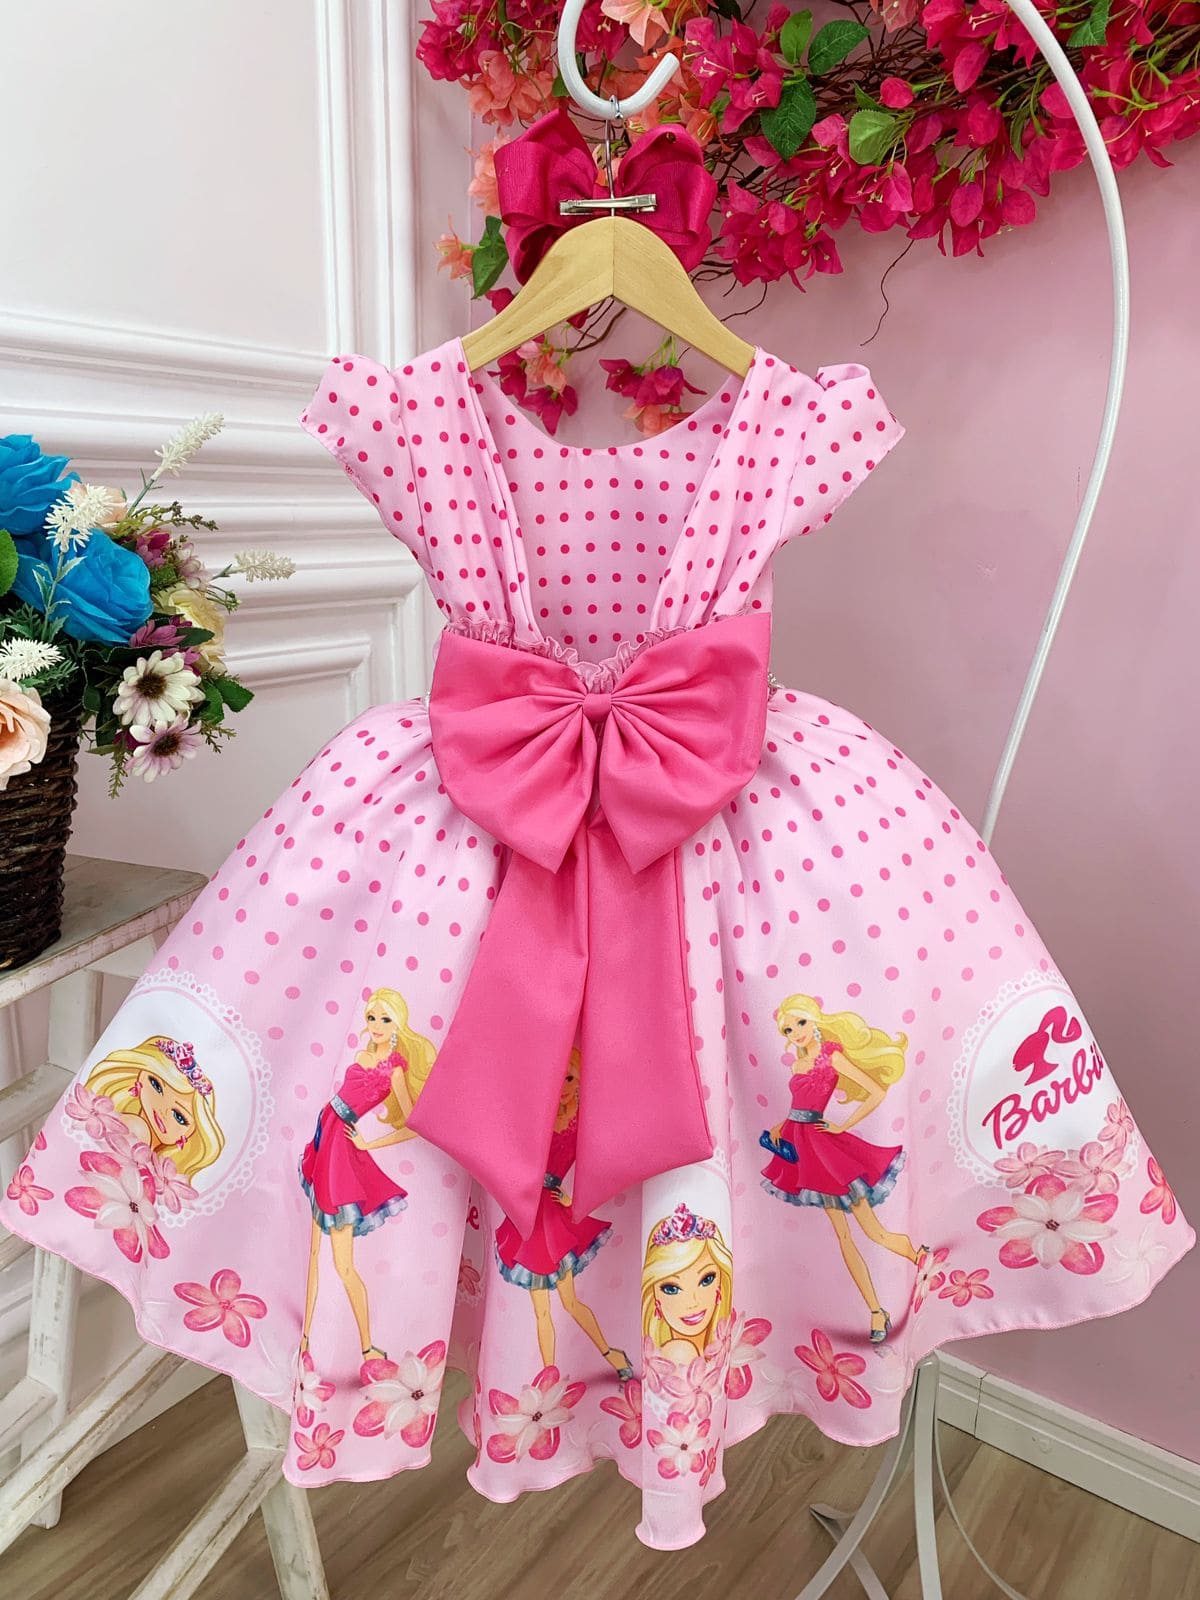 Vestido da Barbie - modelagem adulto e infantil 